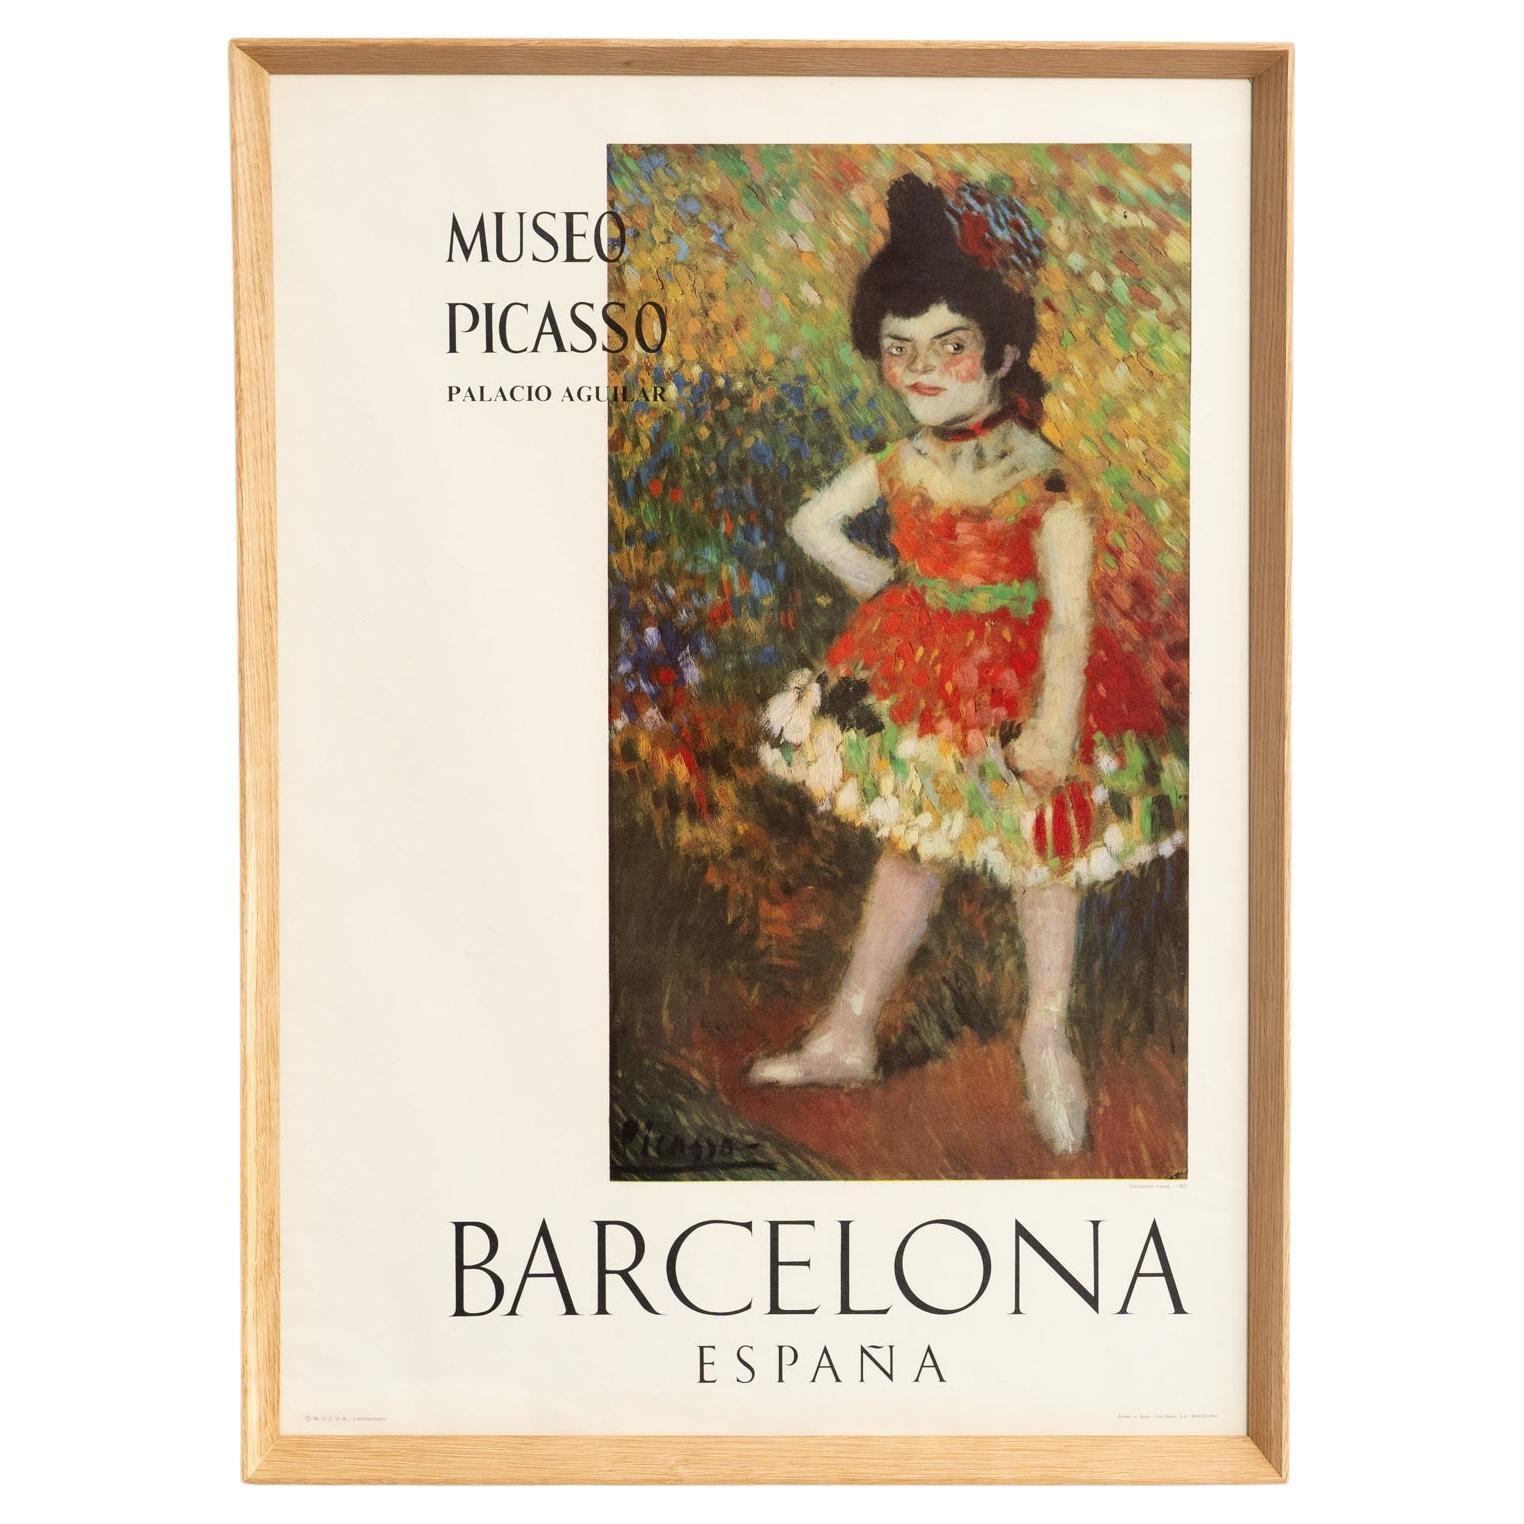 Picasso Museum Poster von Danseuse Naine 1901 von Pablo Picasso, um 1966.